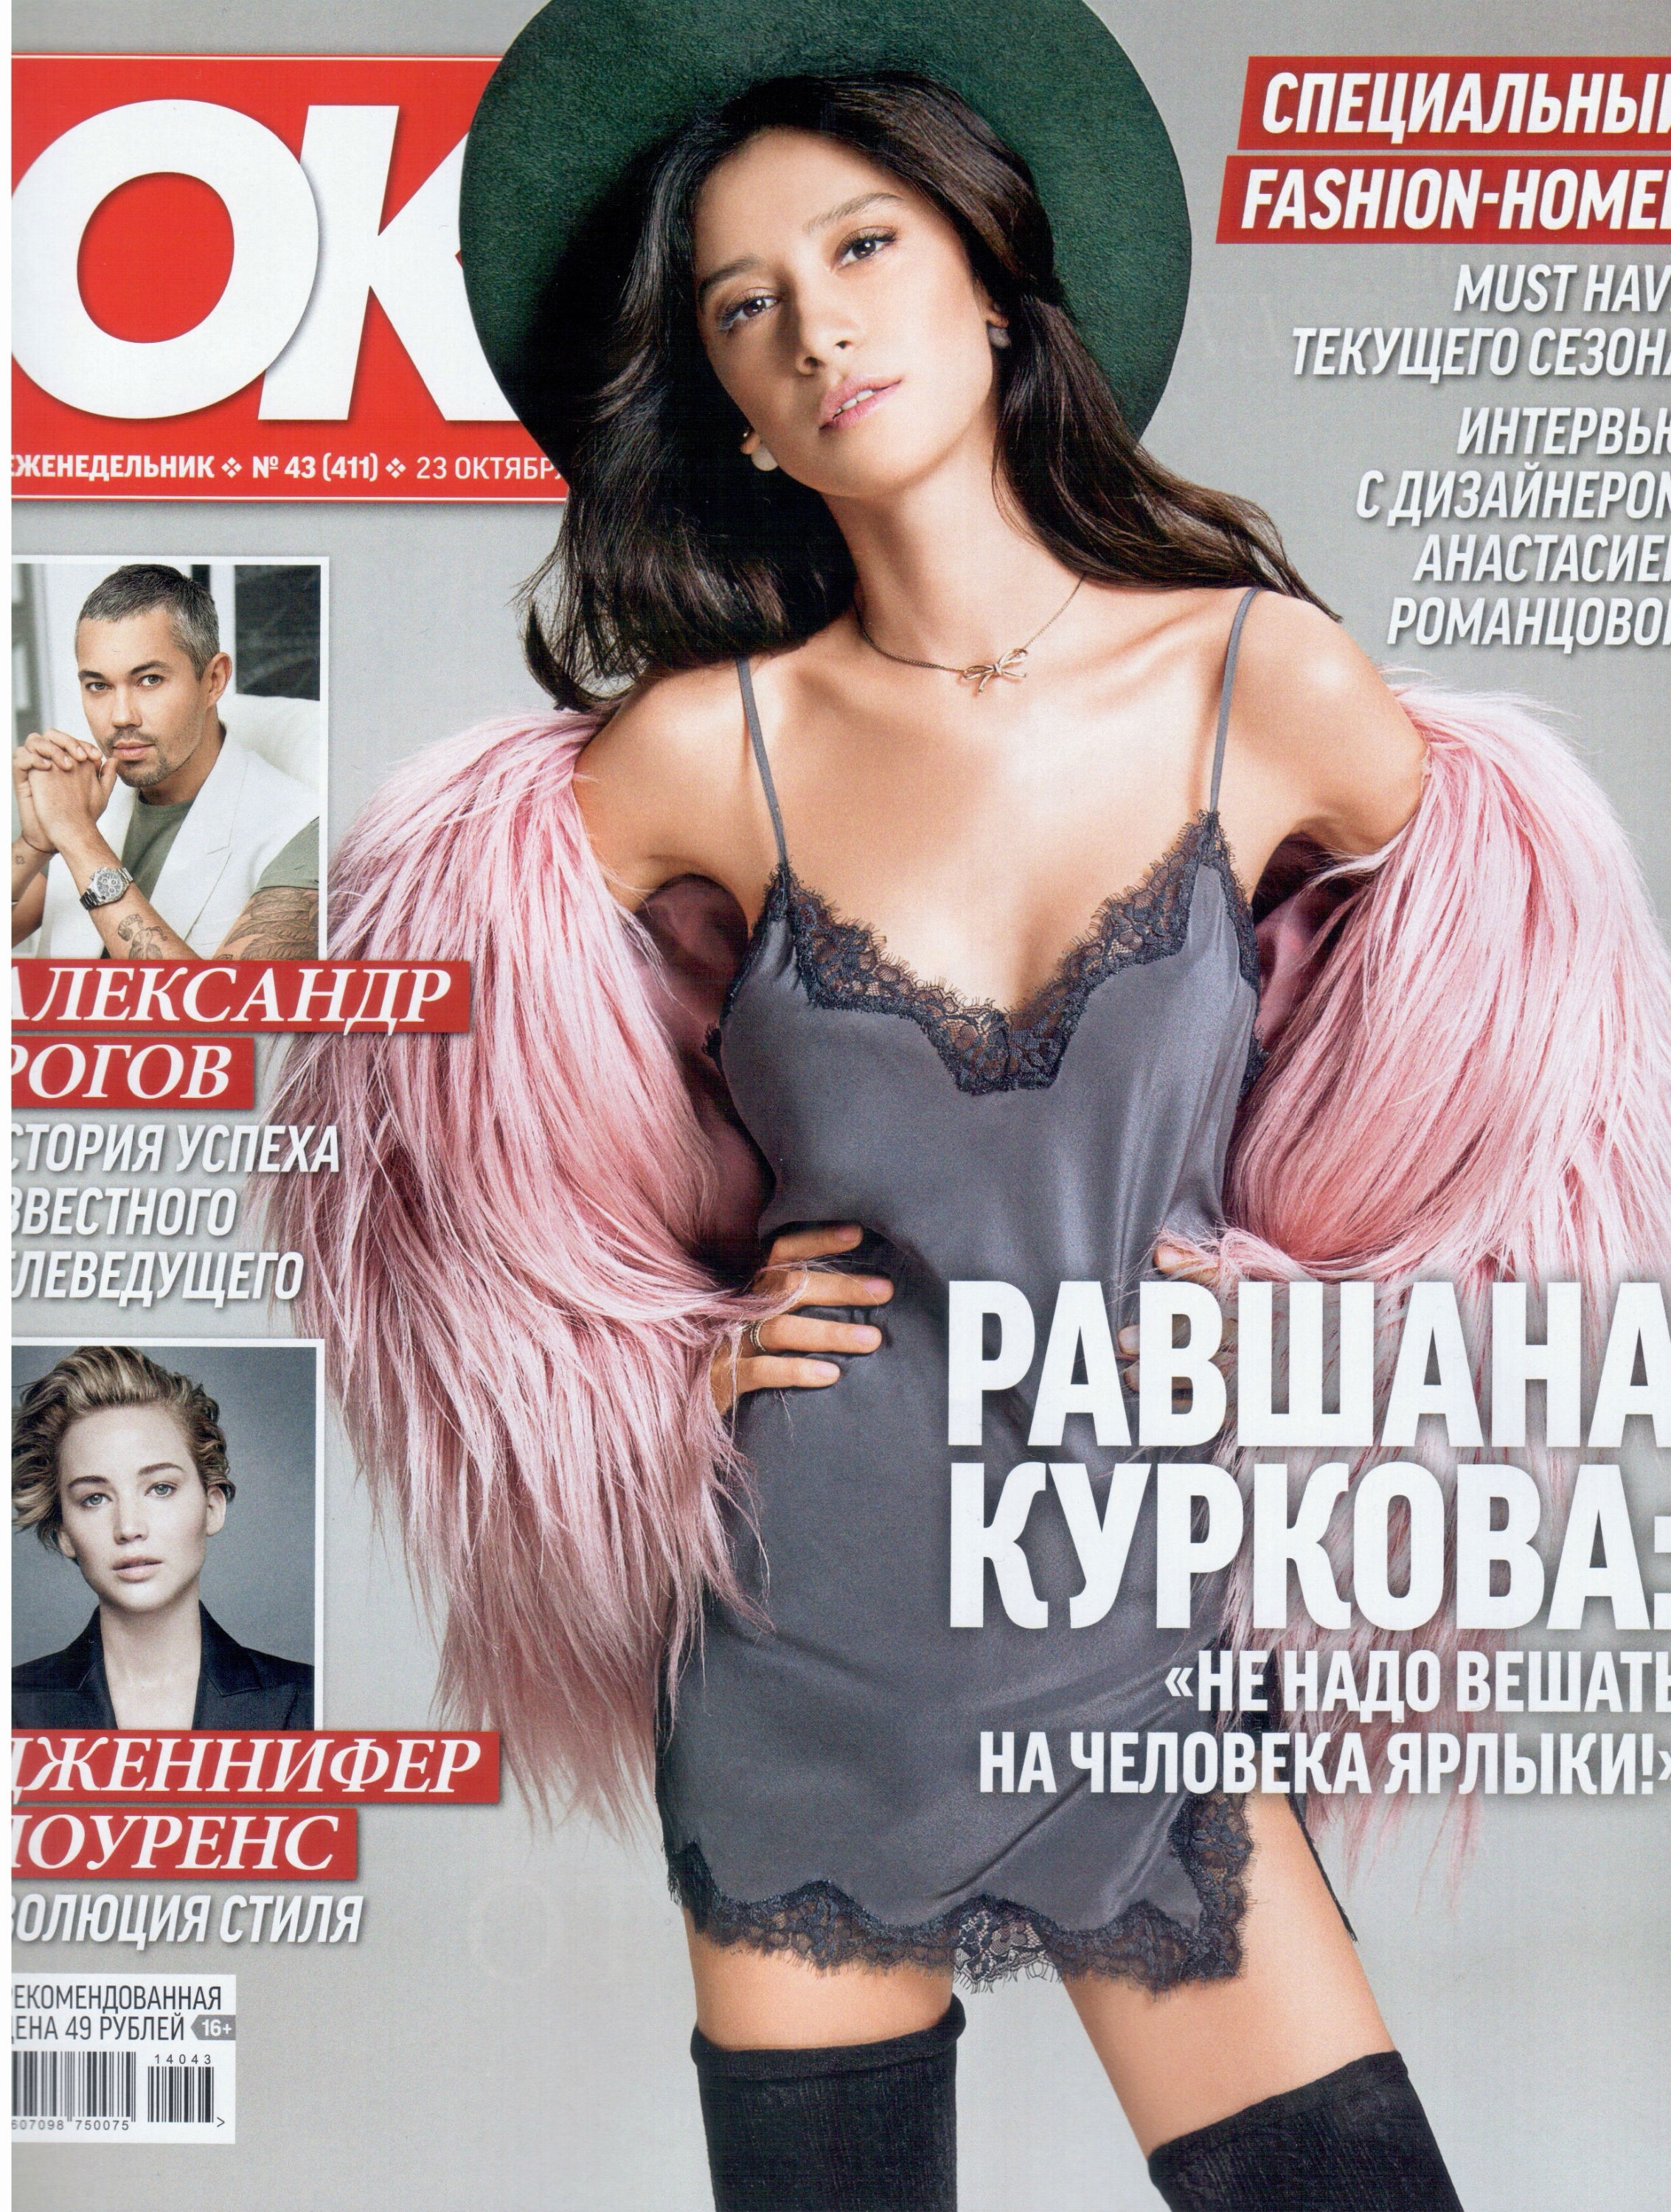 Куркова в апрельском номере журнала gq